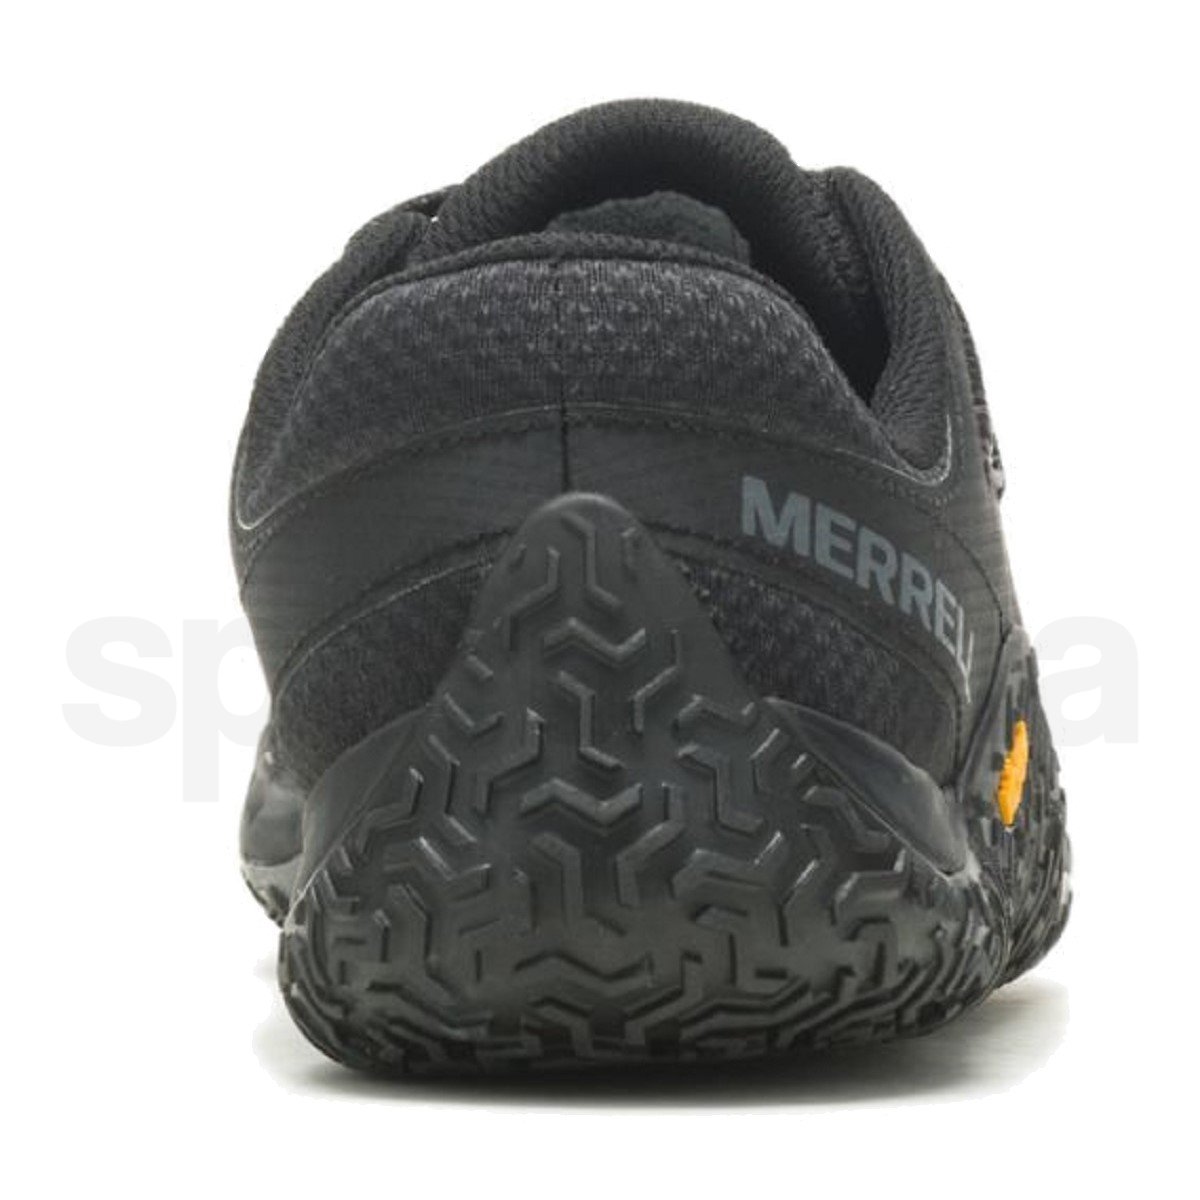 Obuv Merrell Trail Glove 7 M - černá